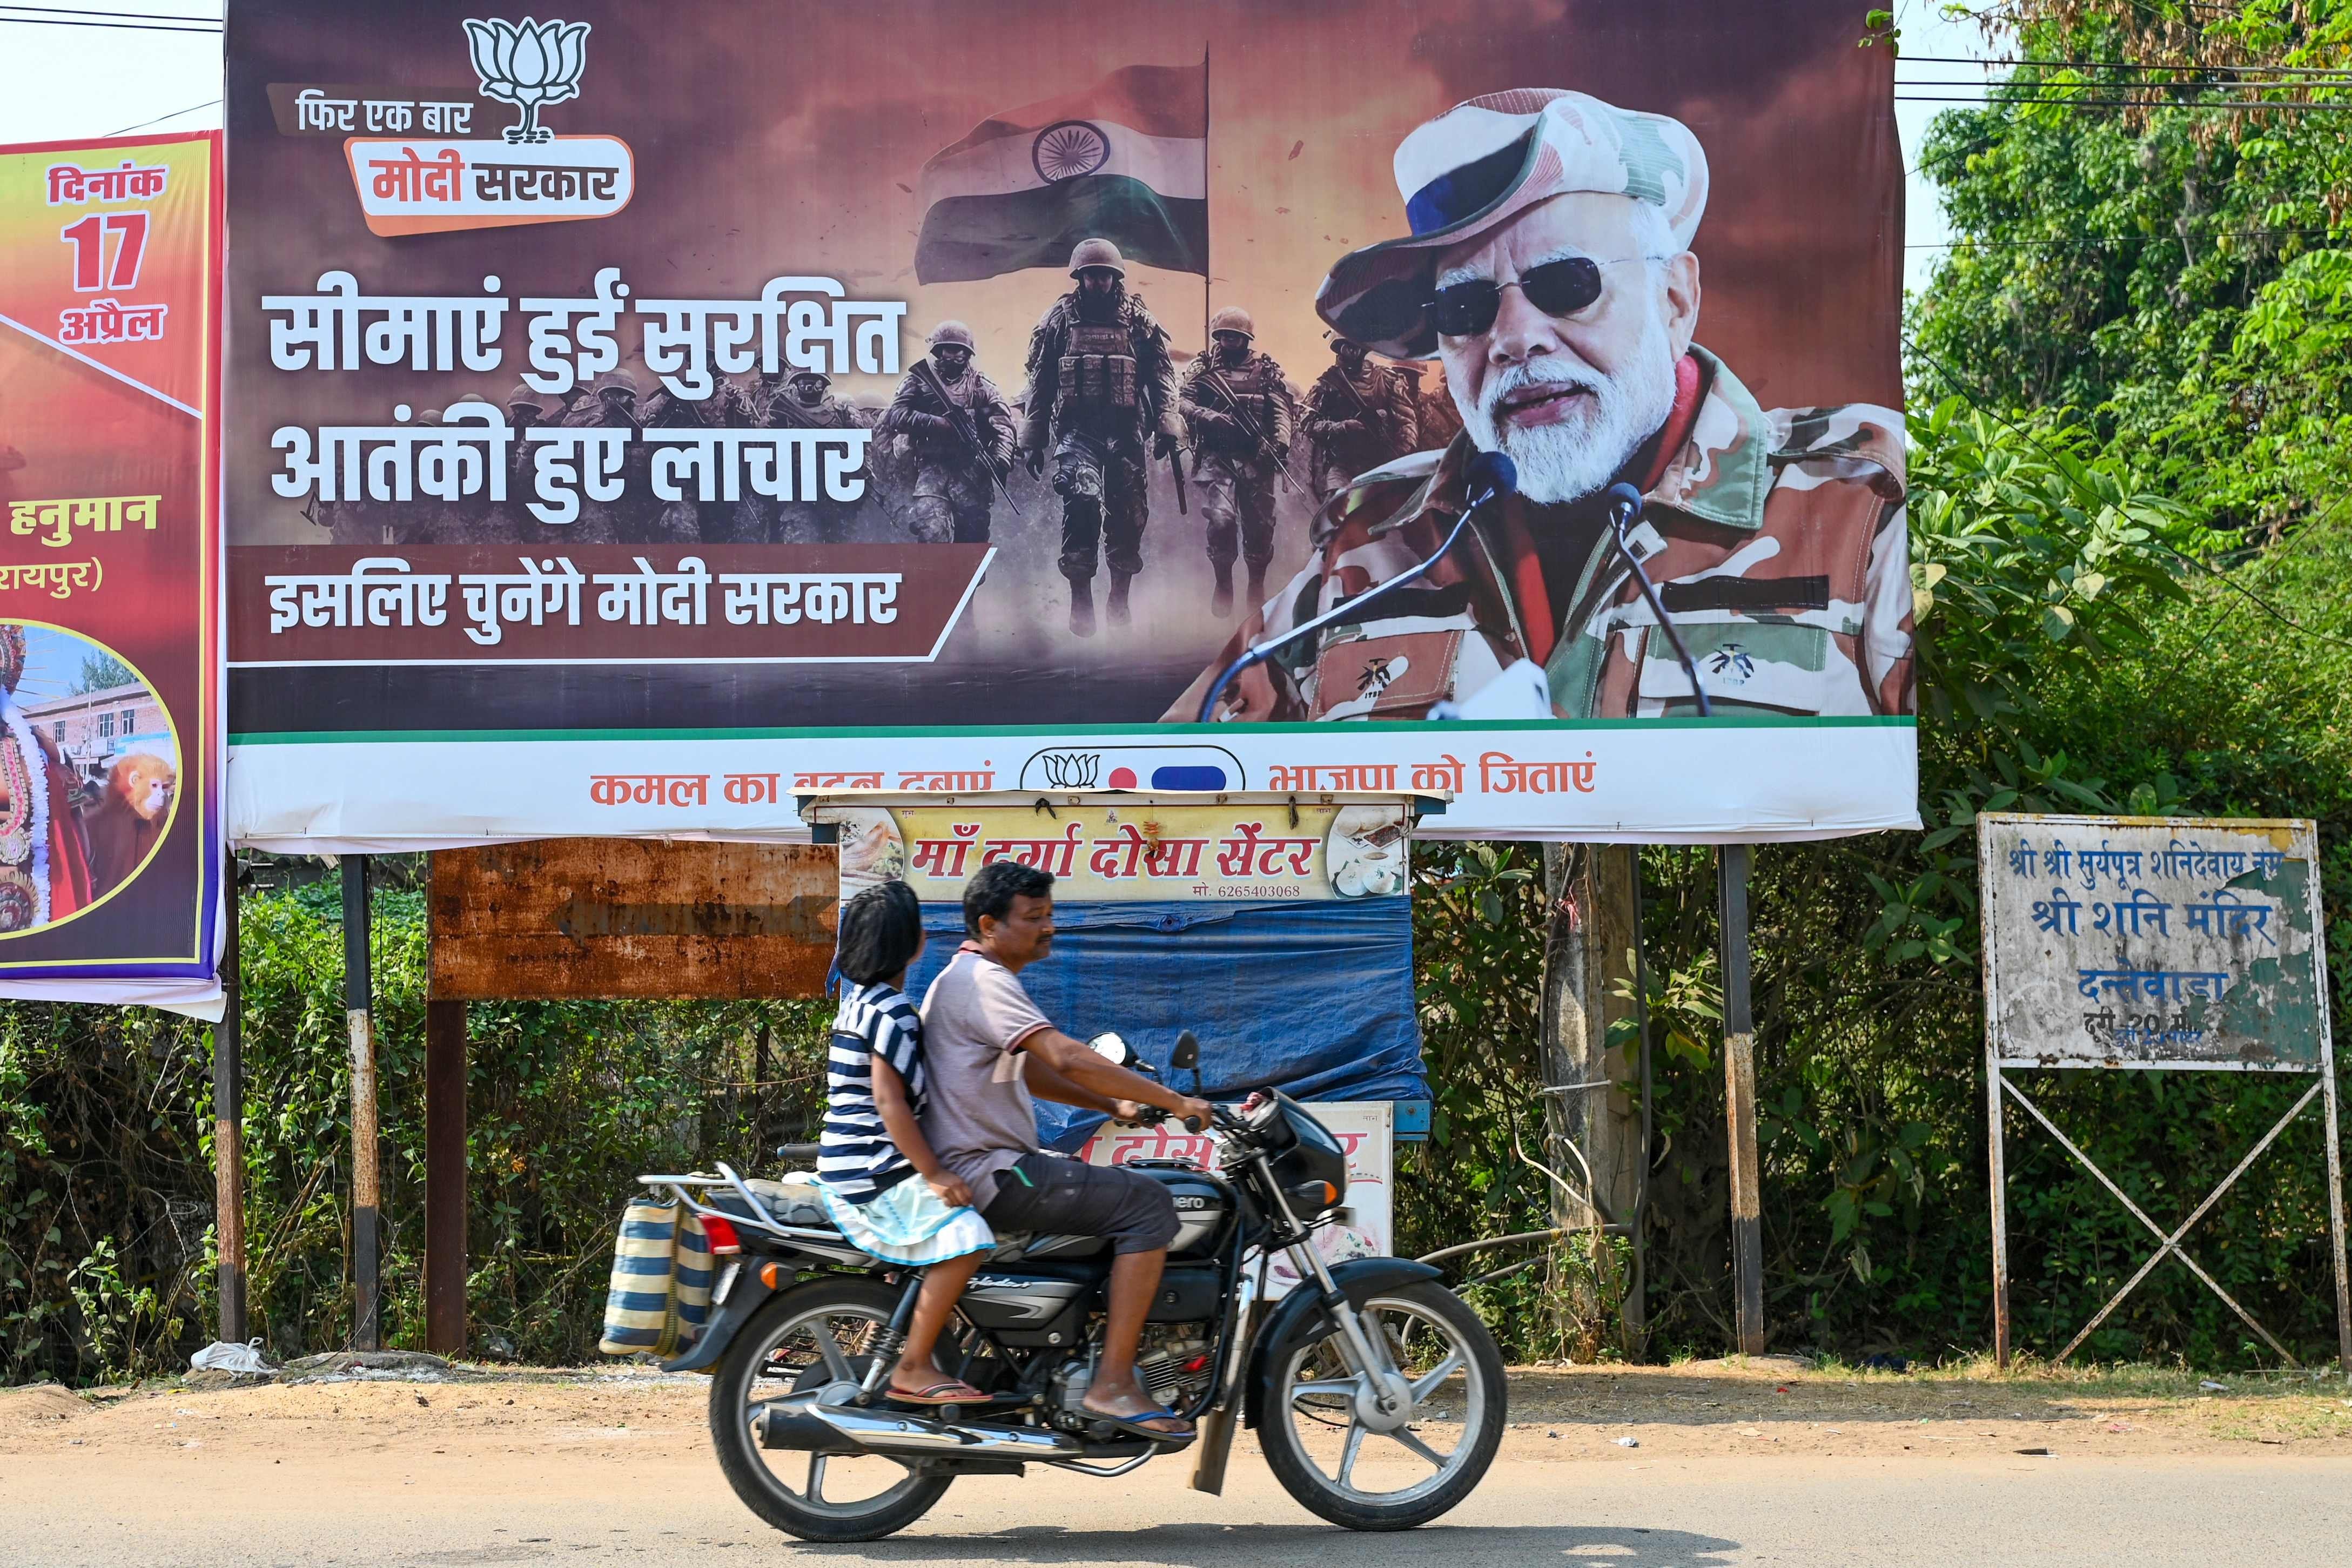 Un cartel de campaña con la imagen del primer ministro Narendra Modi. (Idrees MOHAMMED / AFP)